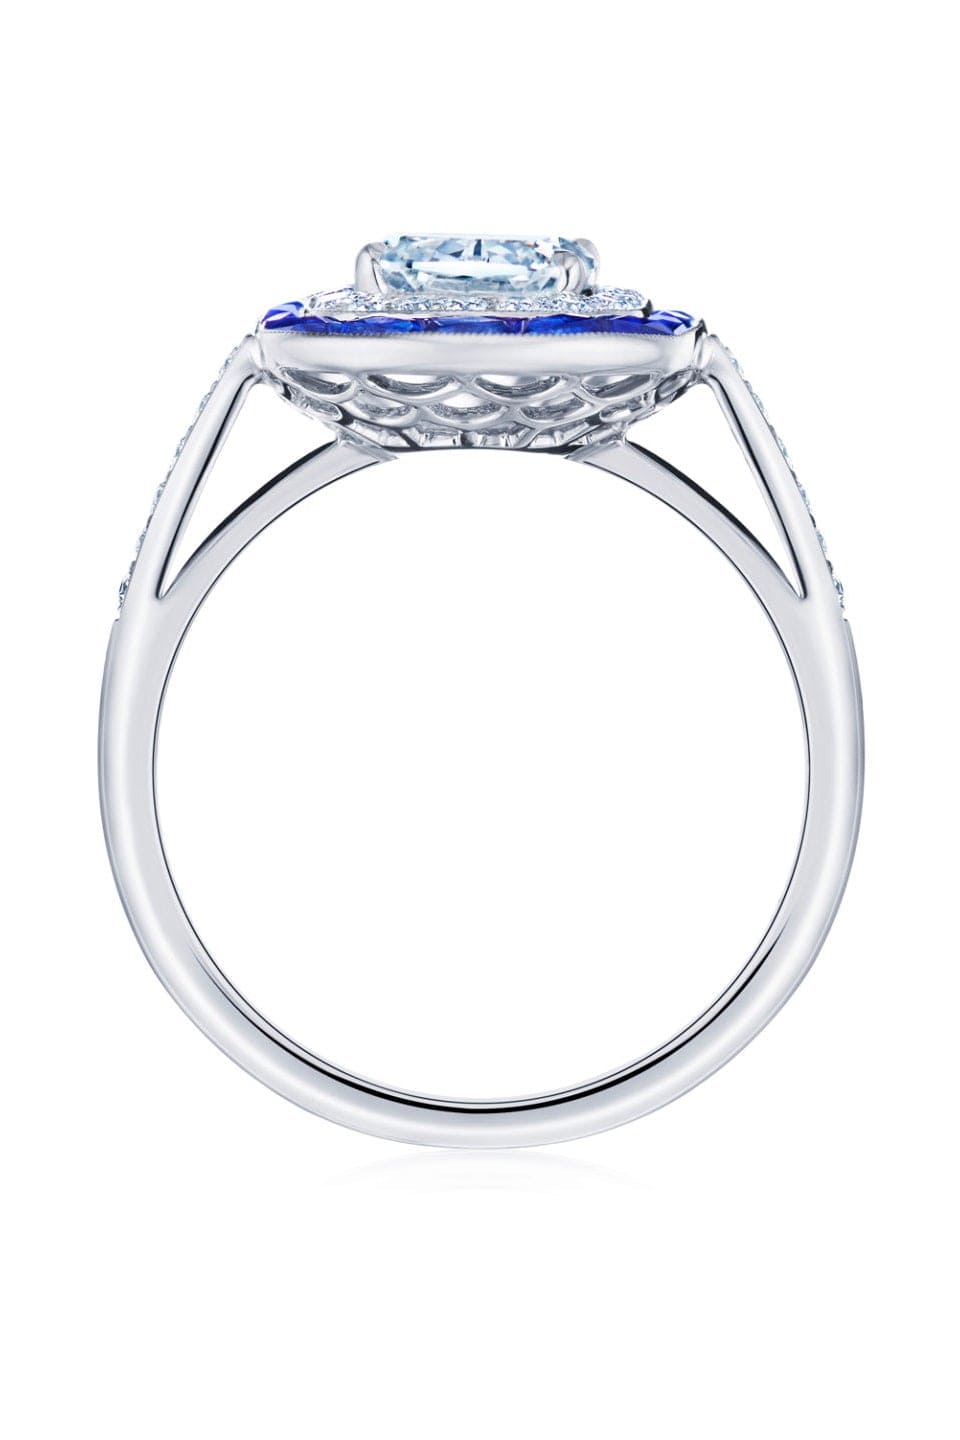 KWIAT-Ashoka Diamond and Sapphire Double Halo Ring-PLATINUM